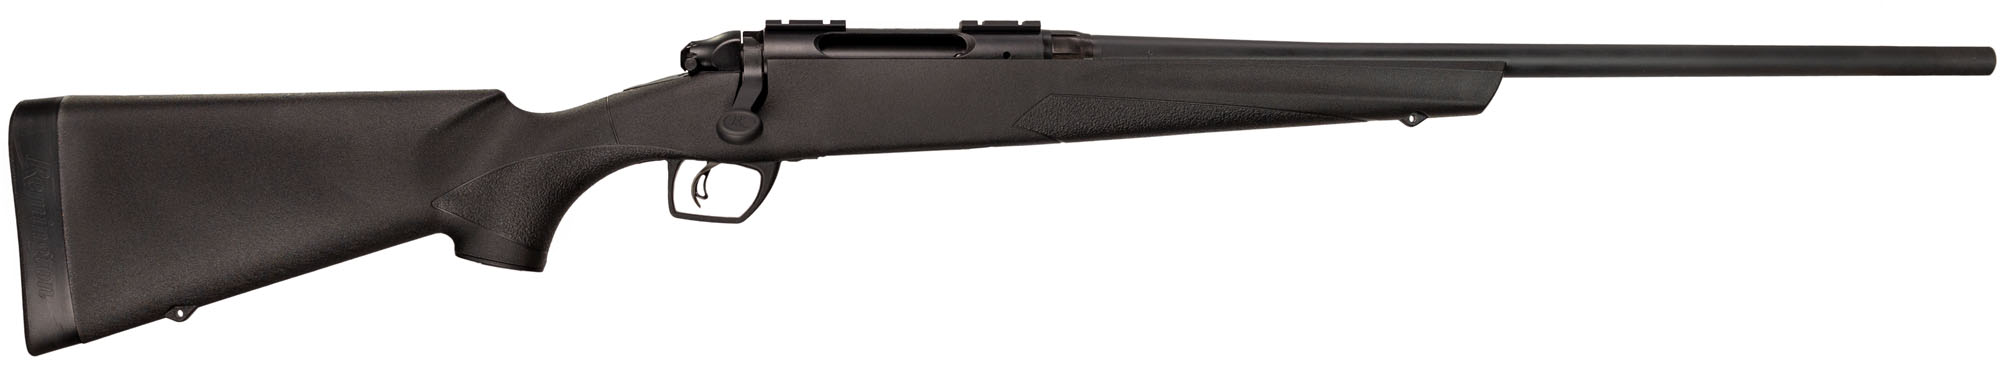 Rifle de cerrojo REMINGTON 783 Compact - 243 Win.